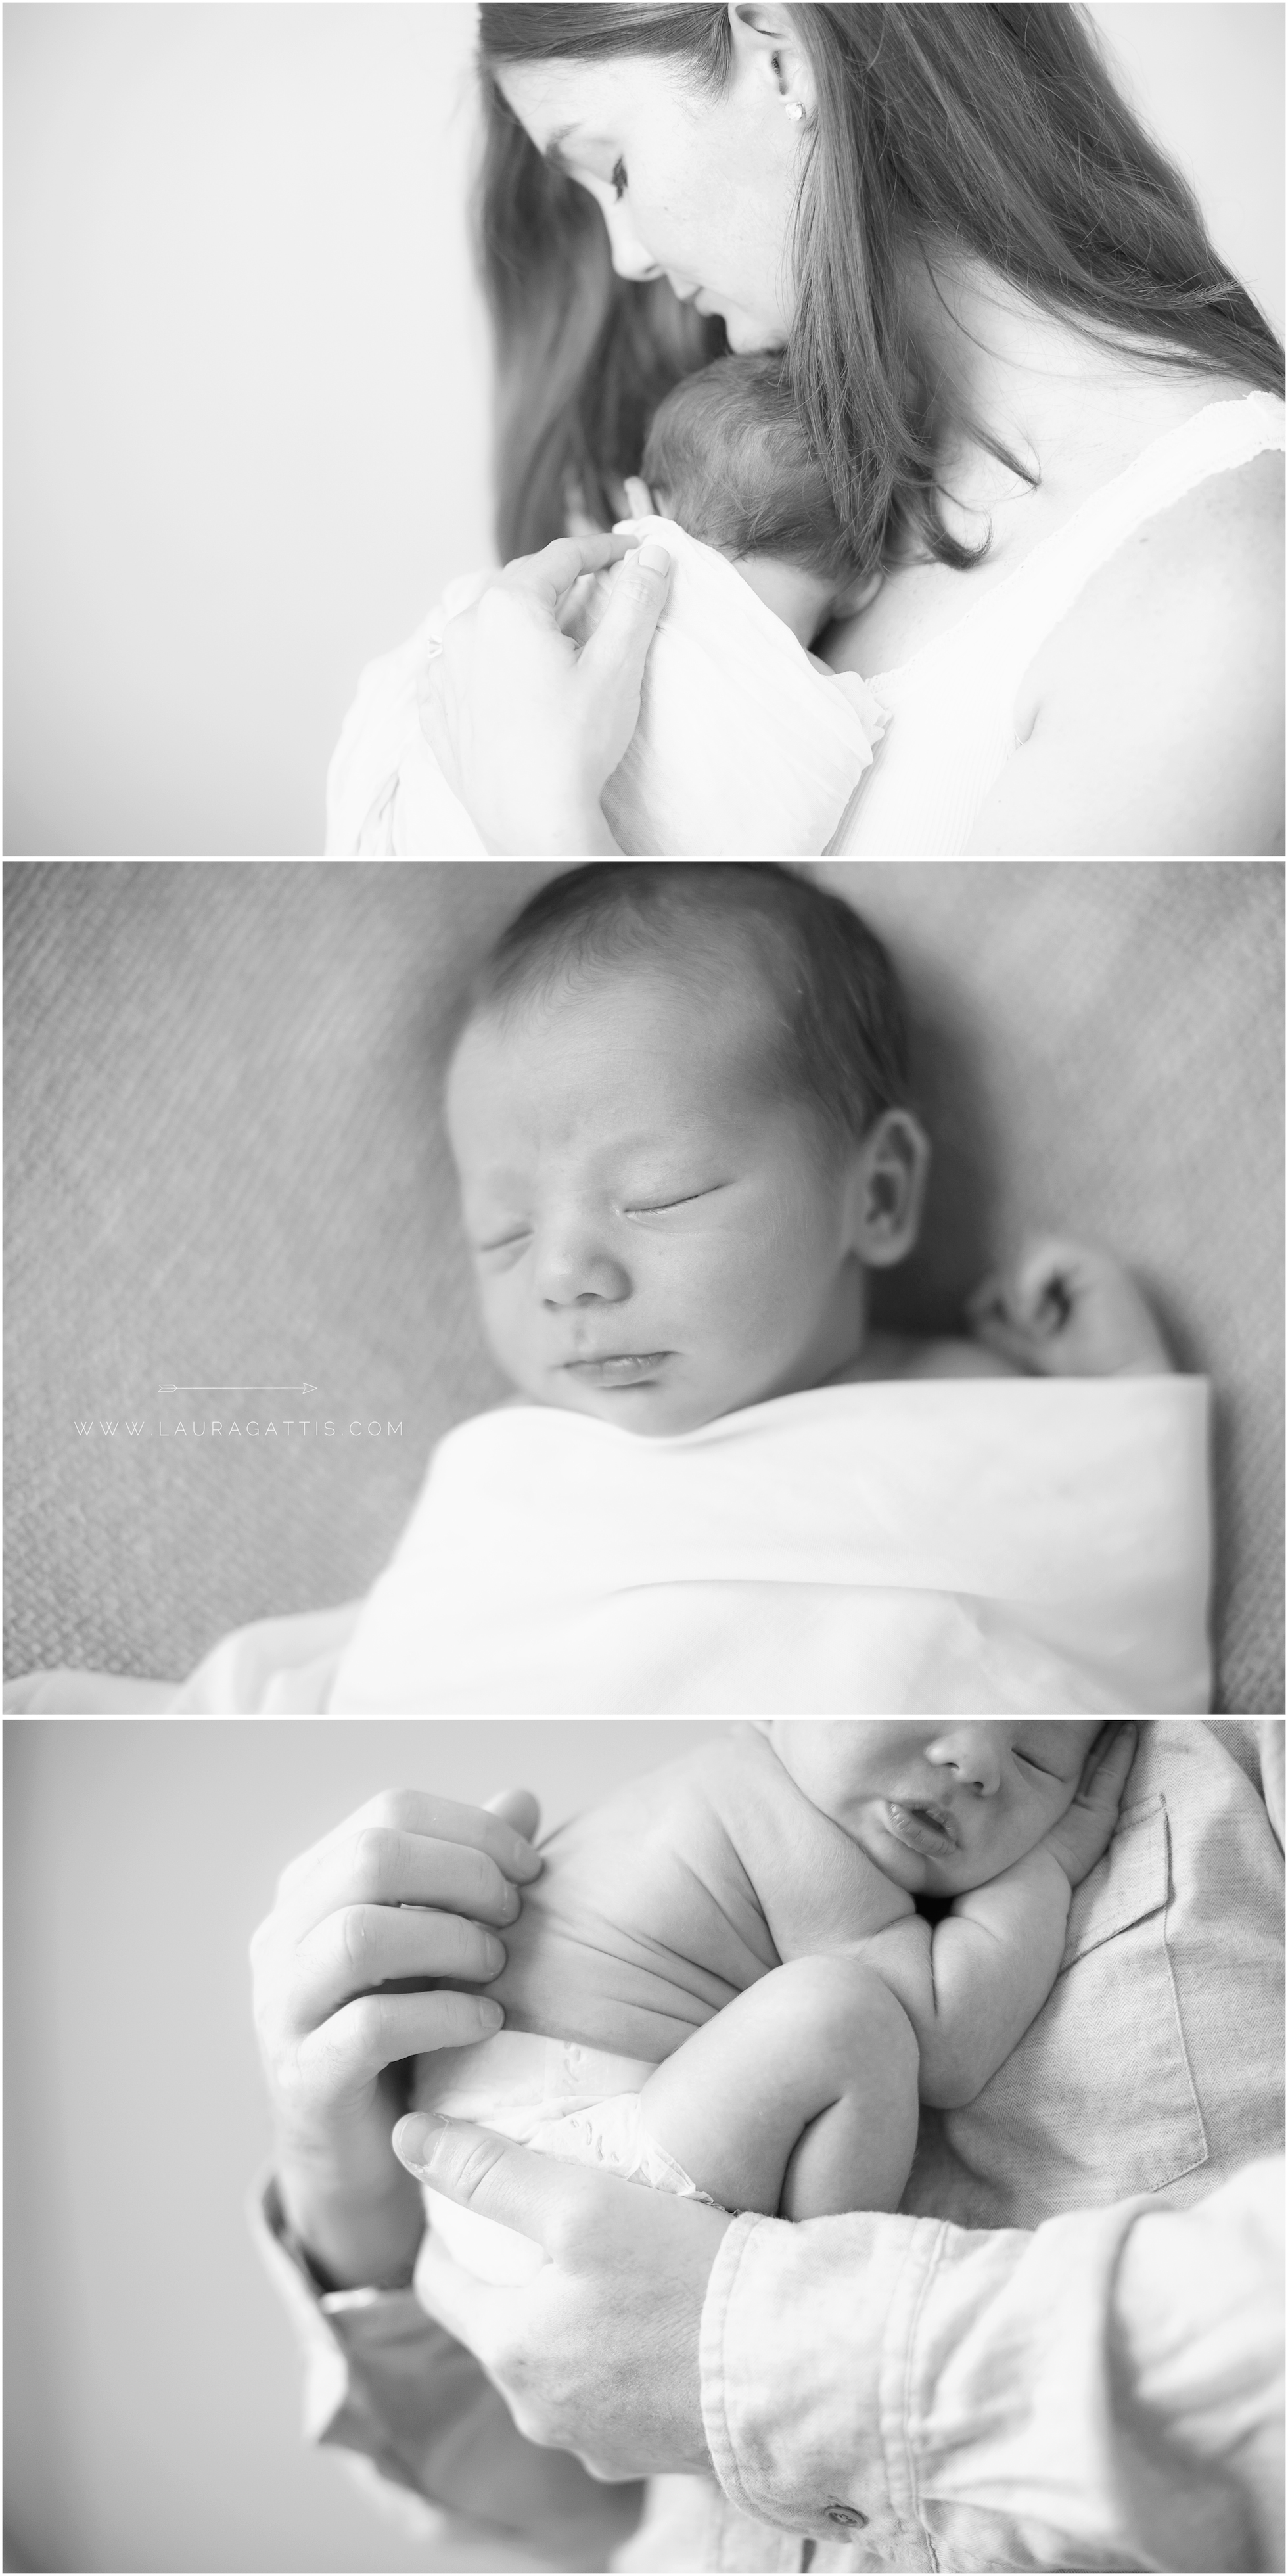 newborn & parents | laura gattis photography | www.lauragattis.com